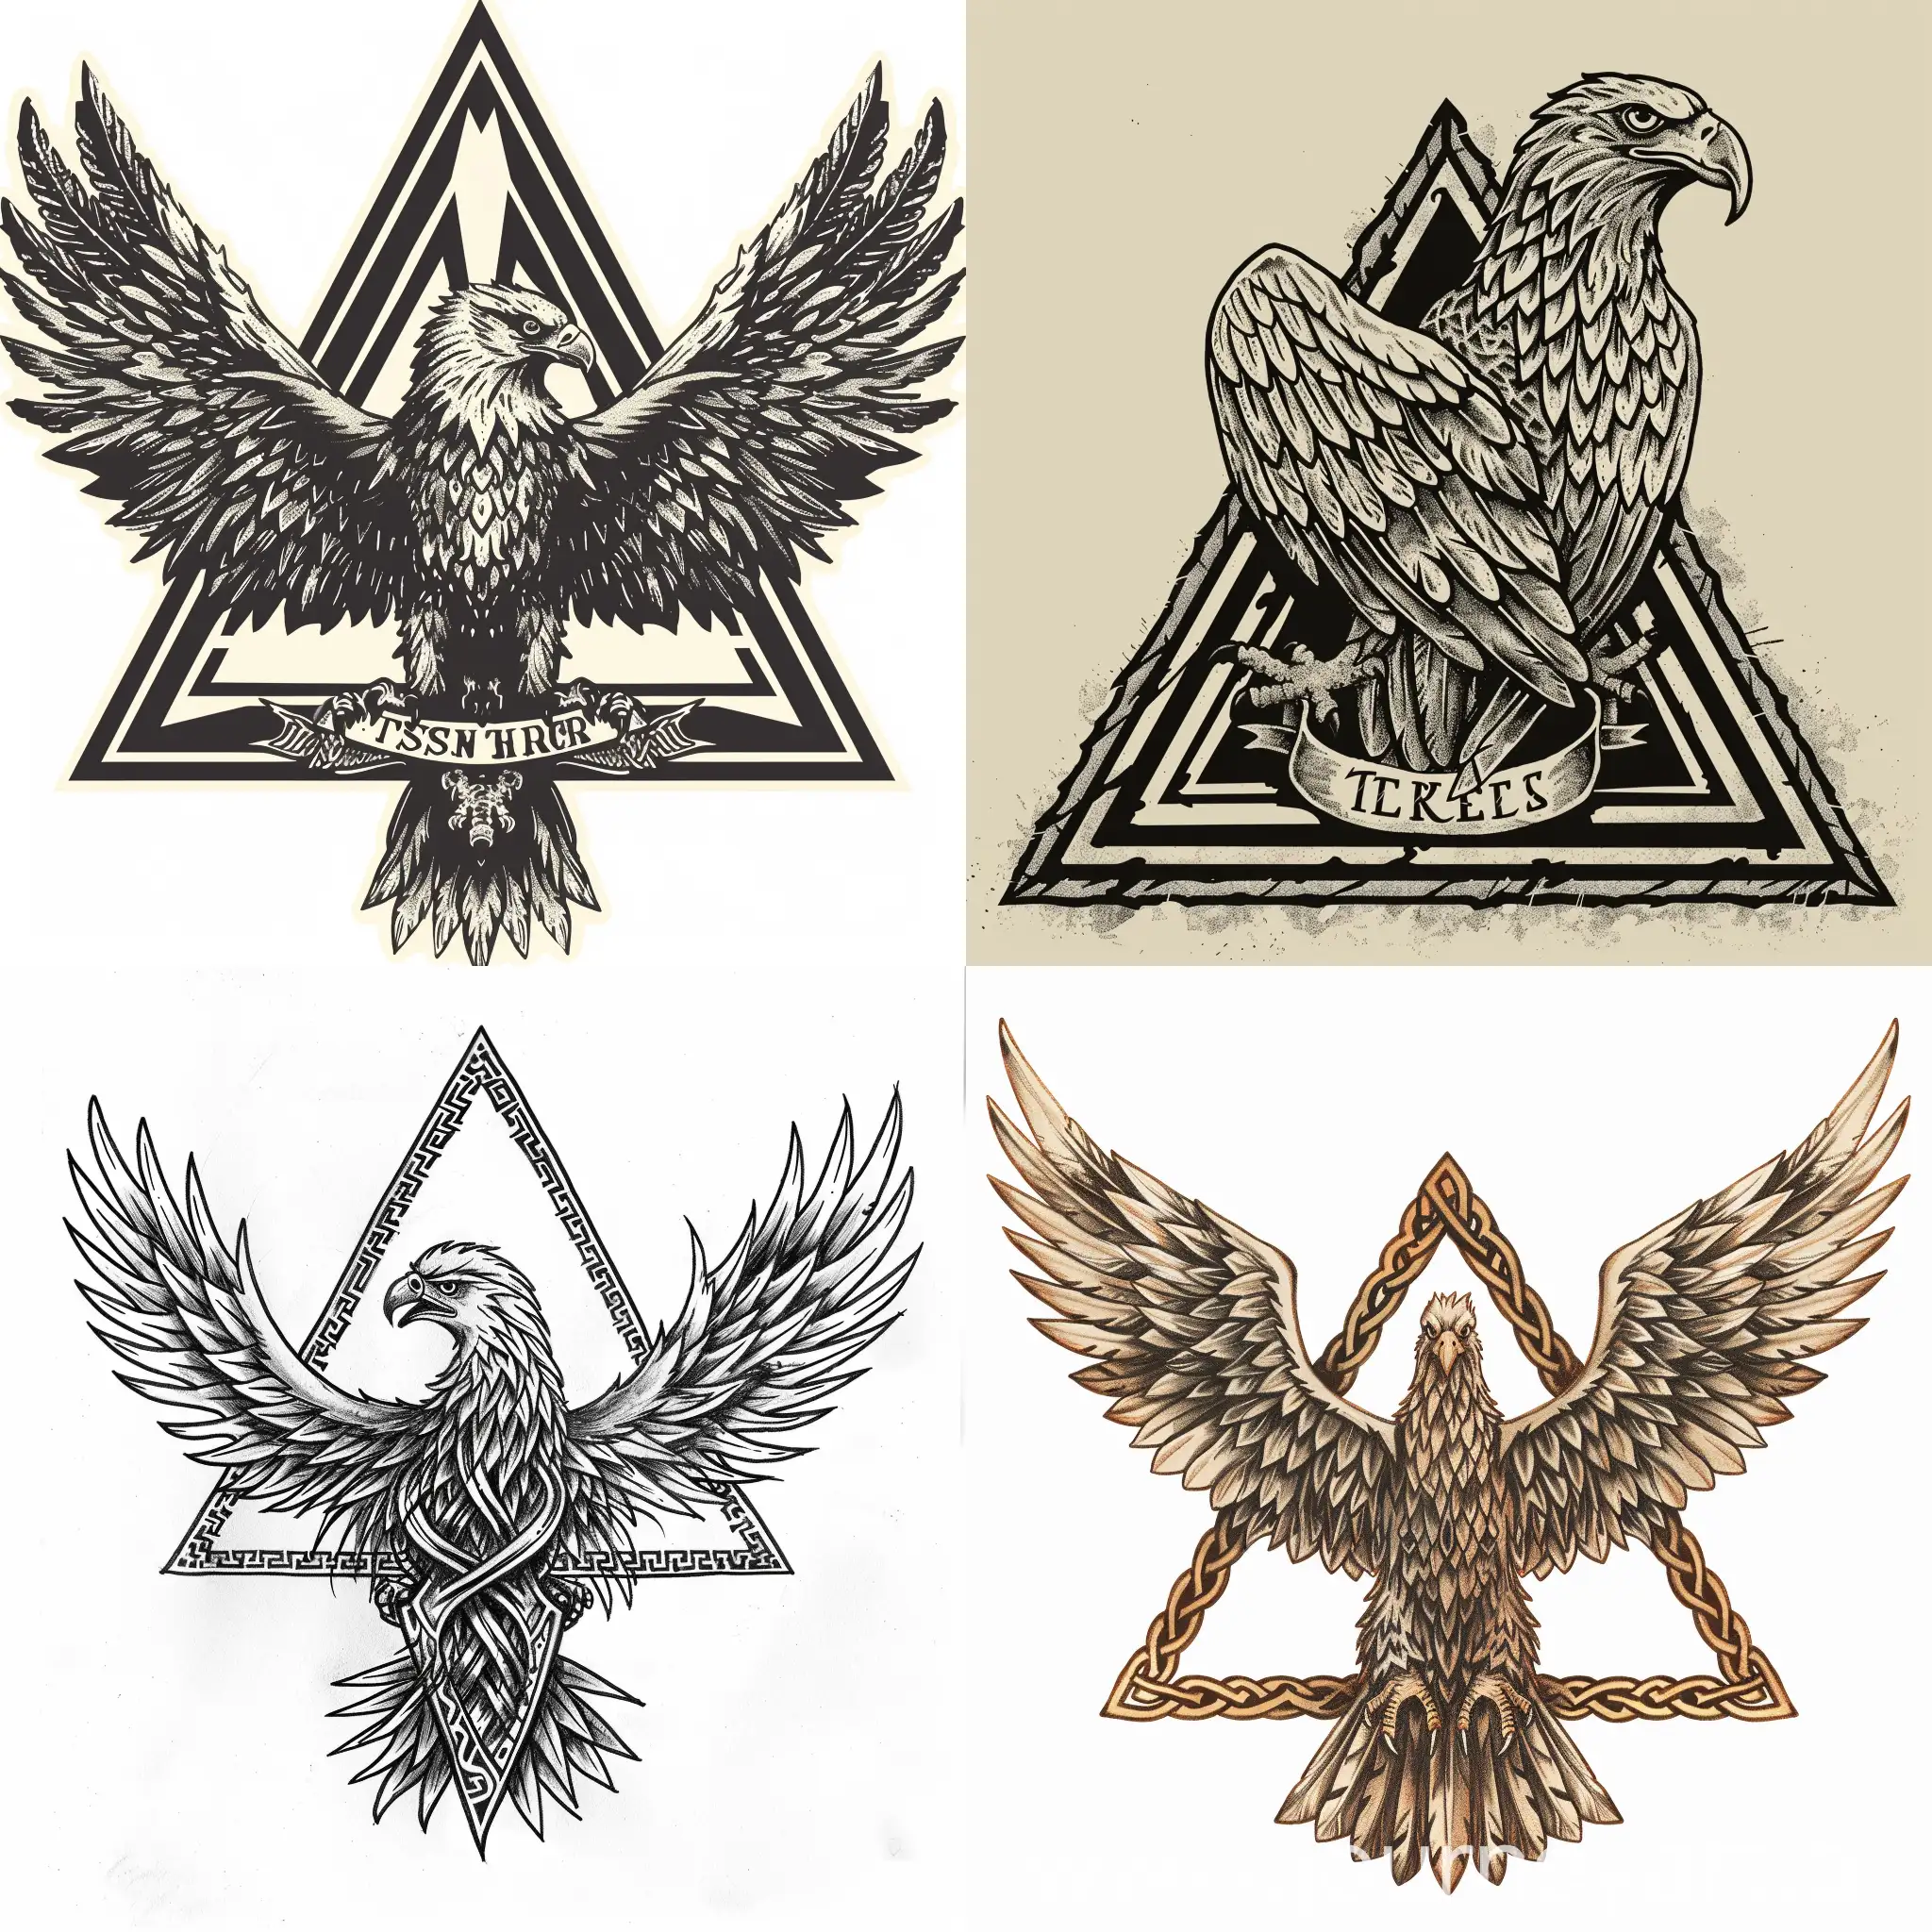 Majestic-Eagle-Emblem-in-Triangular-Coat-of-Arms-Design